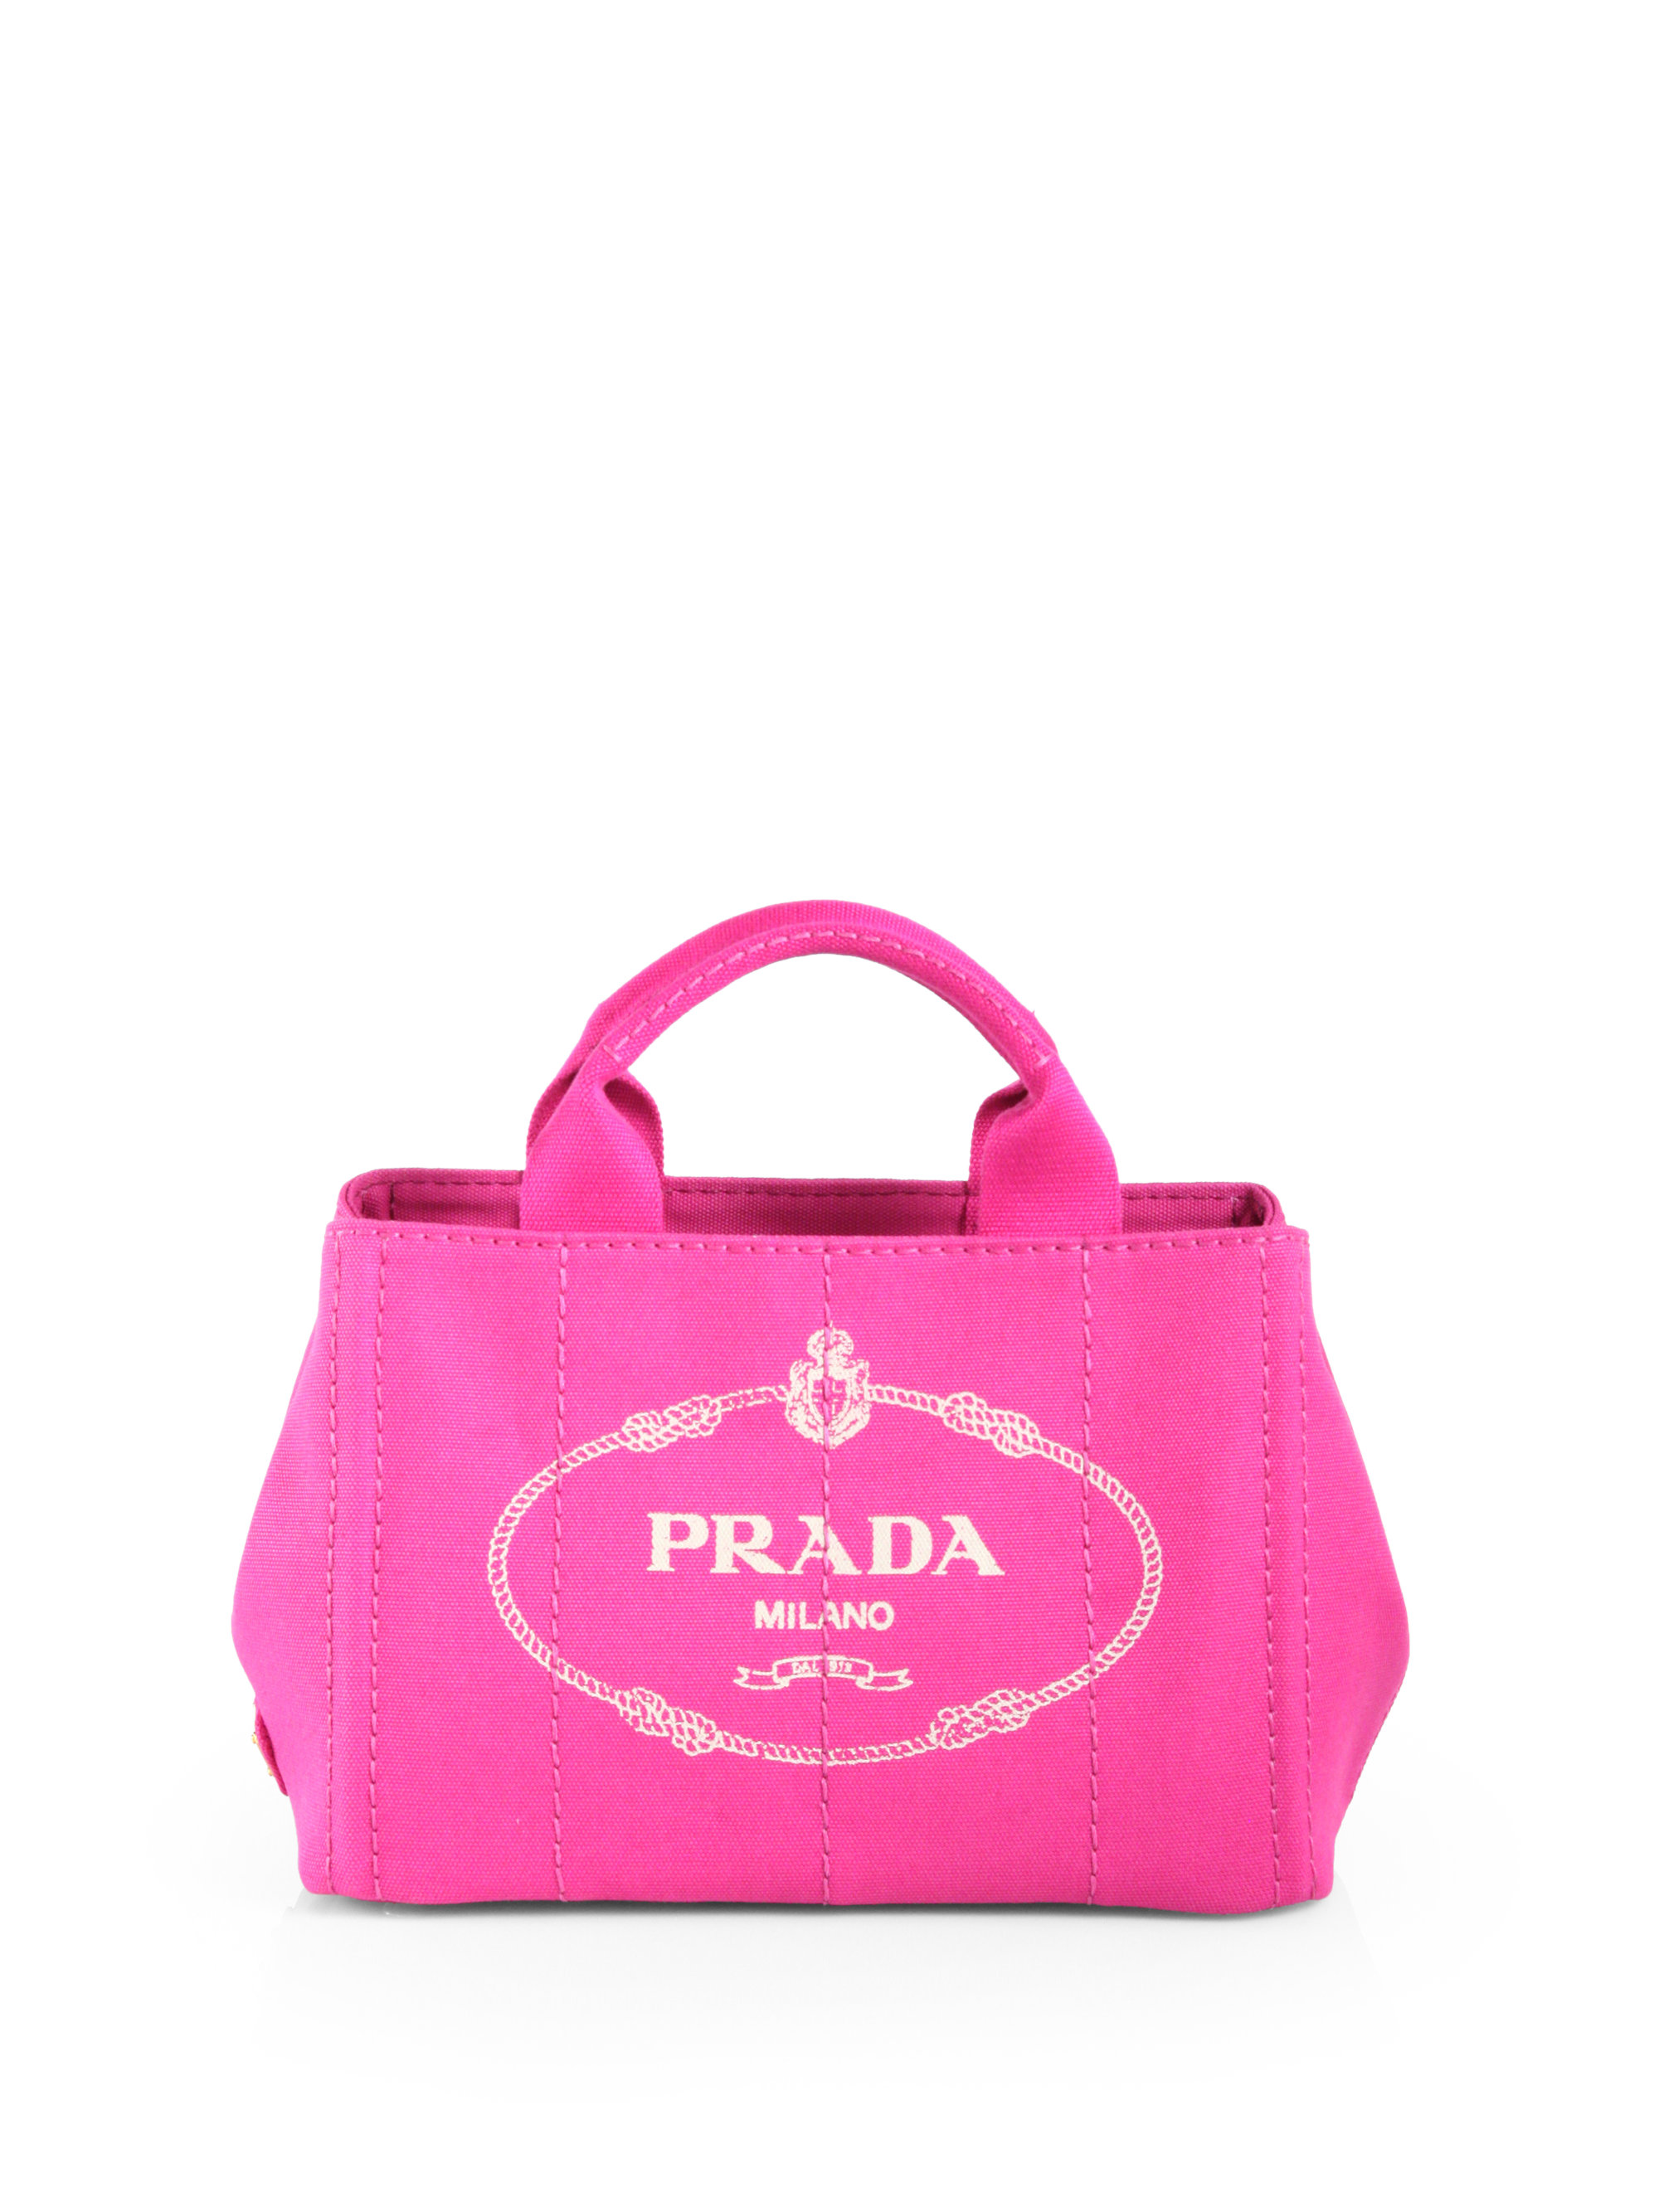 prada limited edition canvas tote bag  